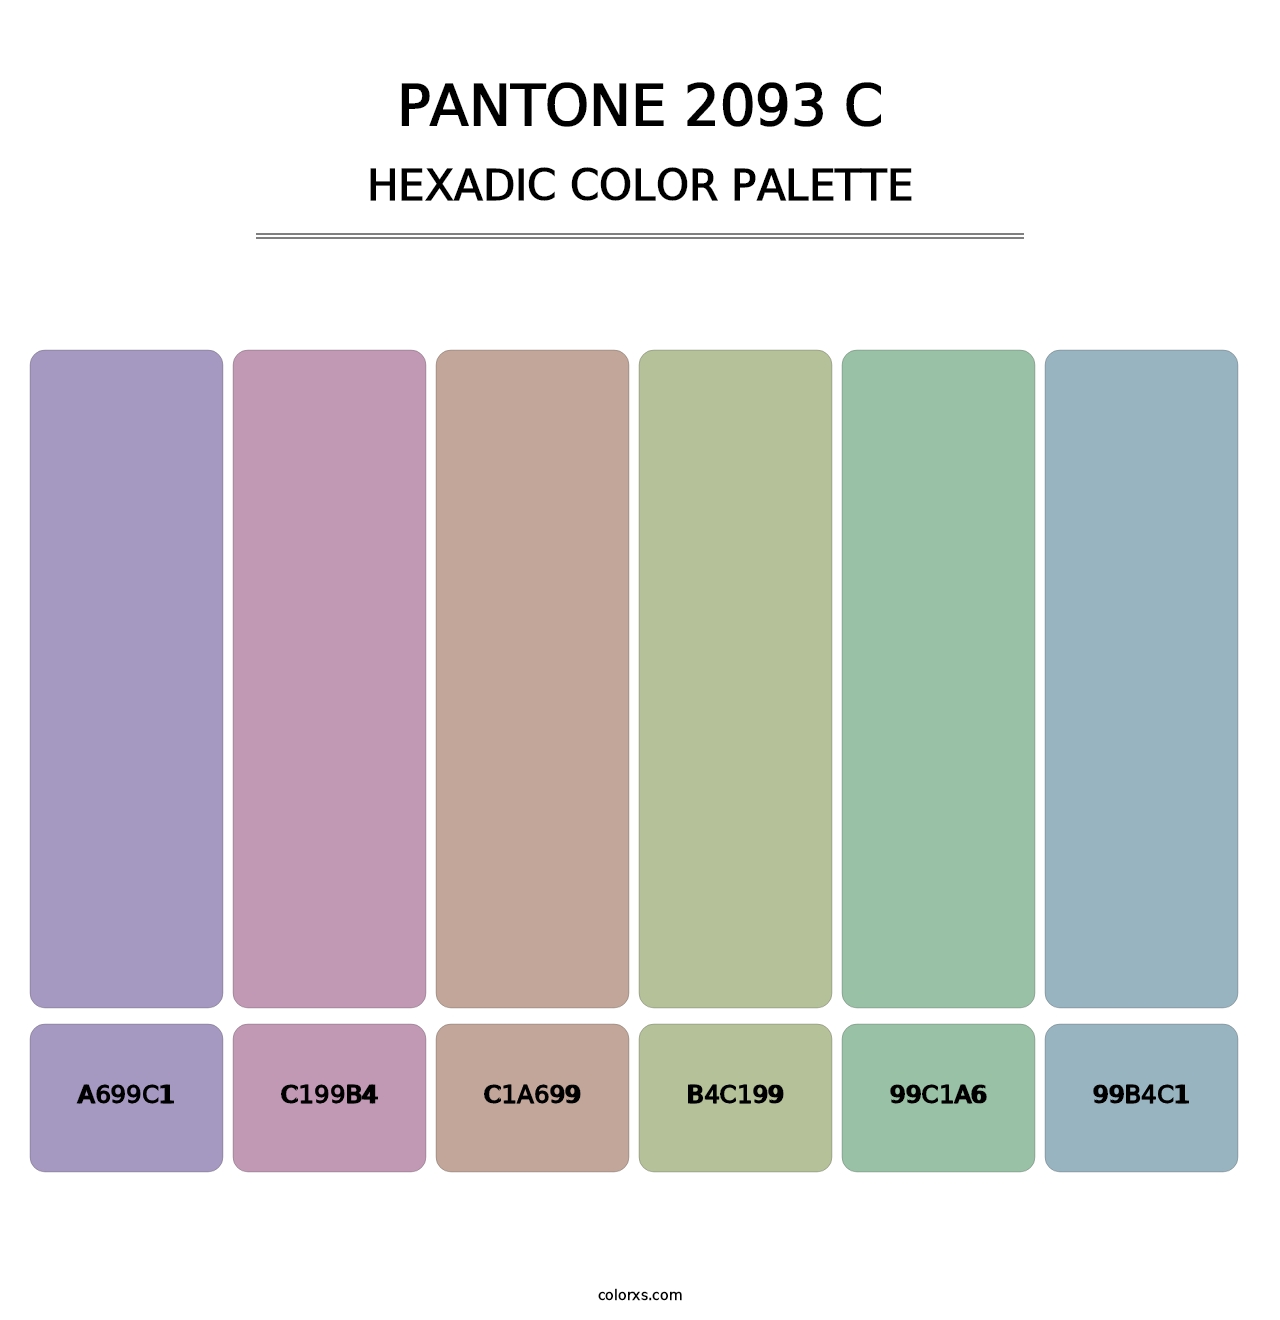 PANTONE 2093 C - Hexadic Color Palette